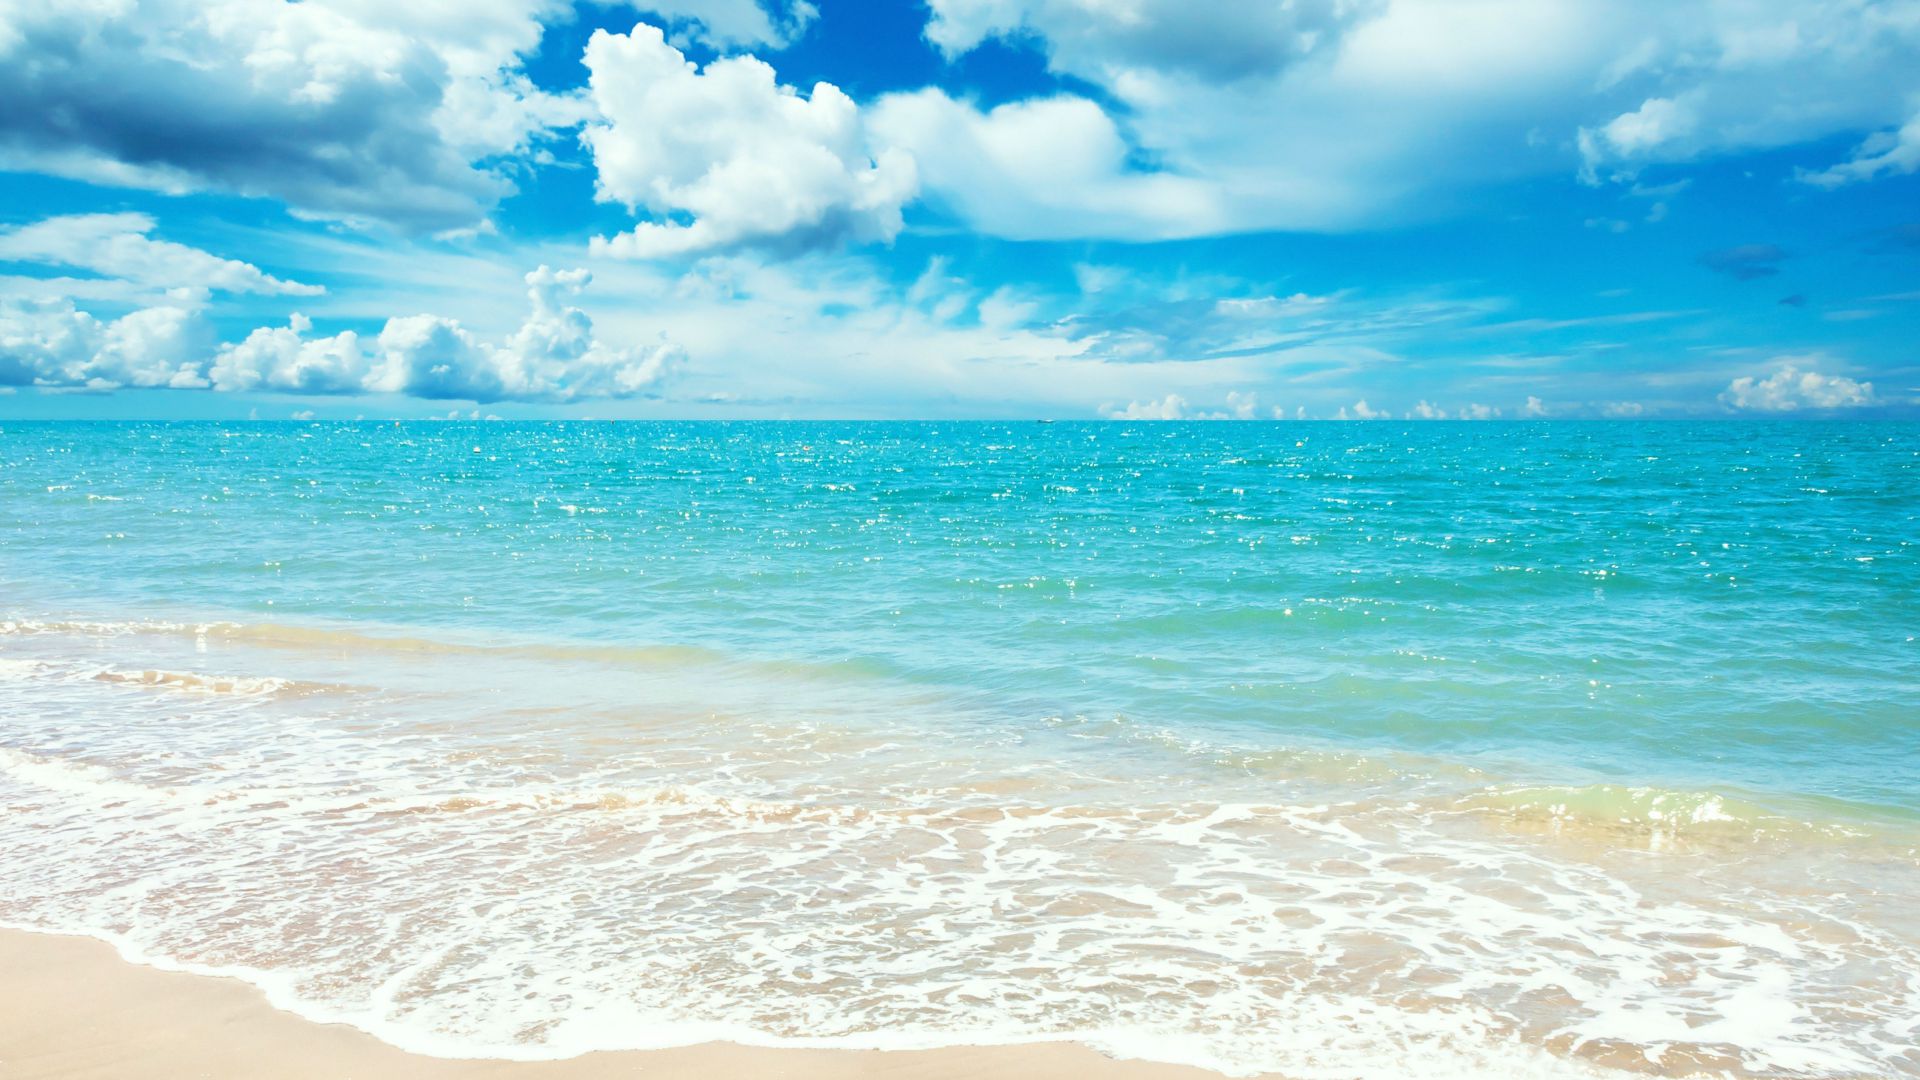 Океан, 5k, 4k, берег, пляж, облака, небо, Ocean, 5k, 4k wallpaper, 8k, shore, beach, clouds, sky (horizontal)